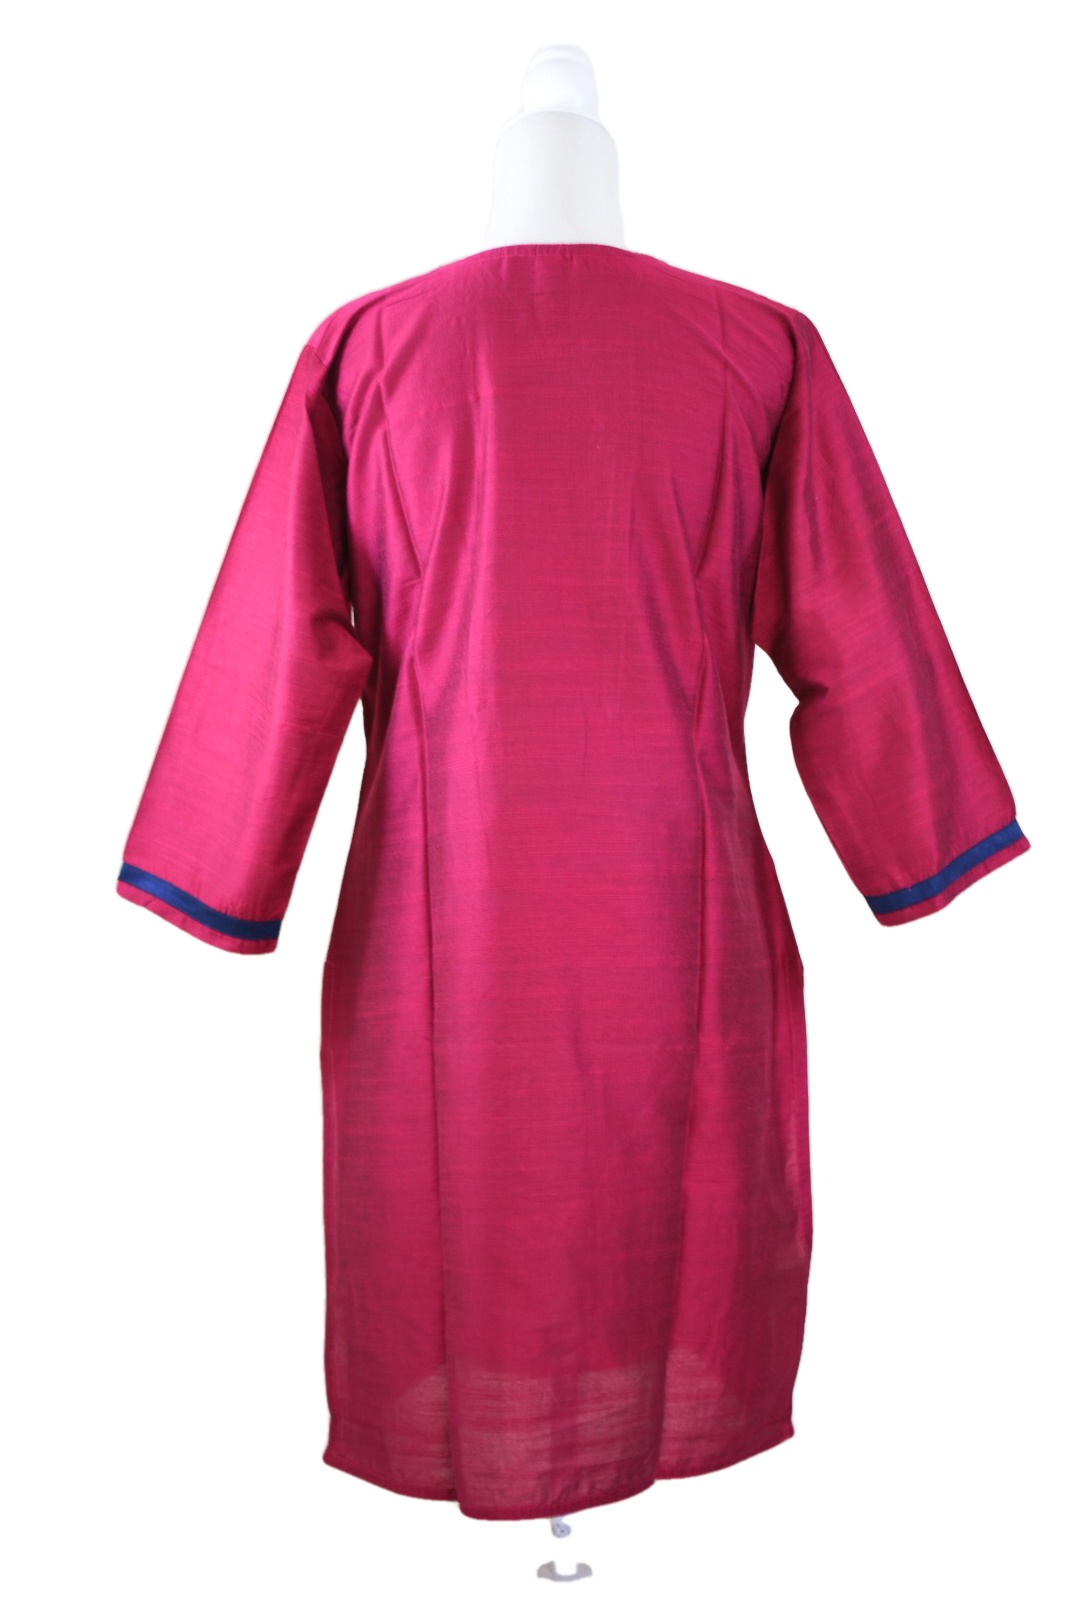 Dark Pink Color - Raw Silk Kurti Size Small/Medium - 30/32 Junior size. Big Girls size - 18 plus